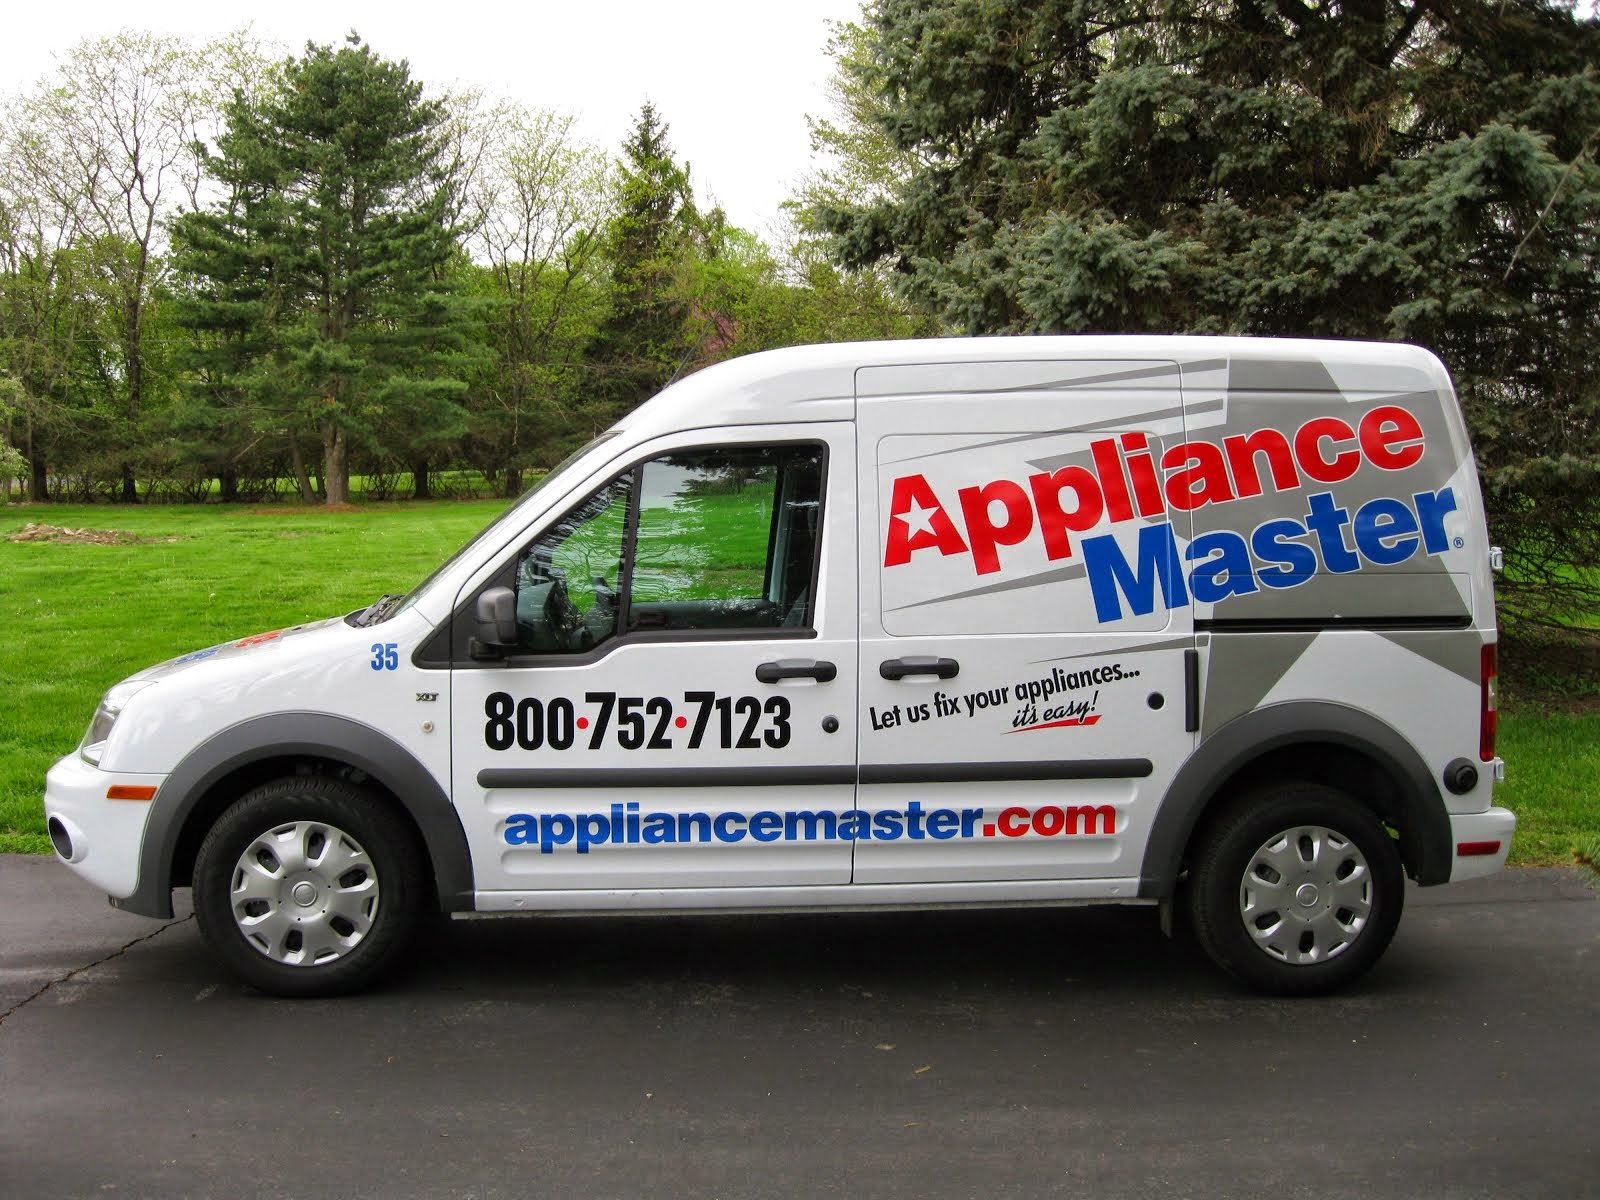 Princeton Appliance Repair 609-683-7171